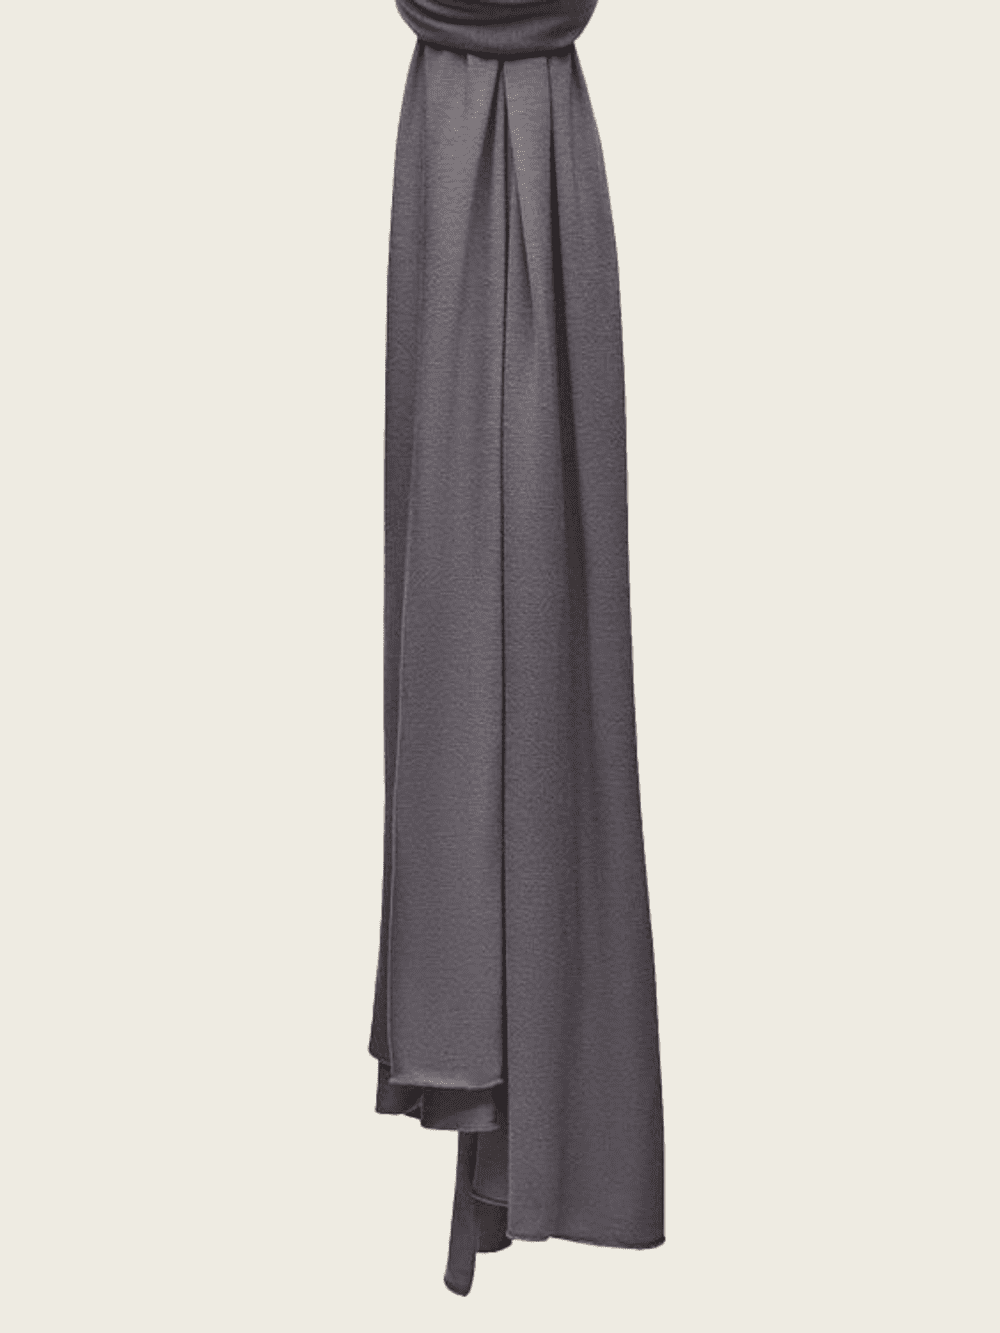 Gray Hijab